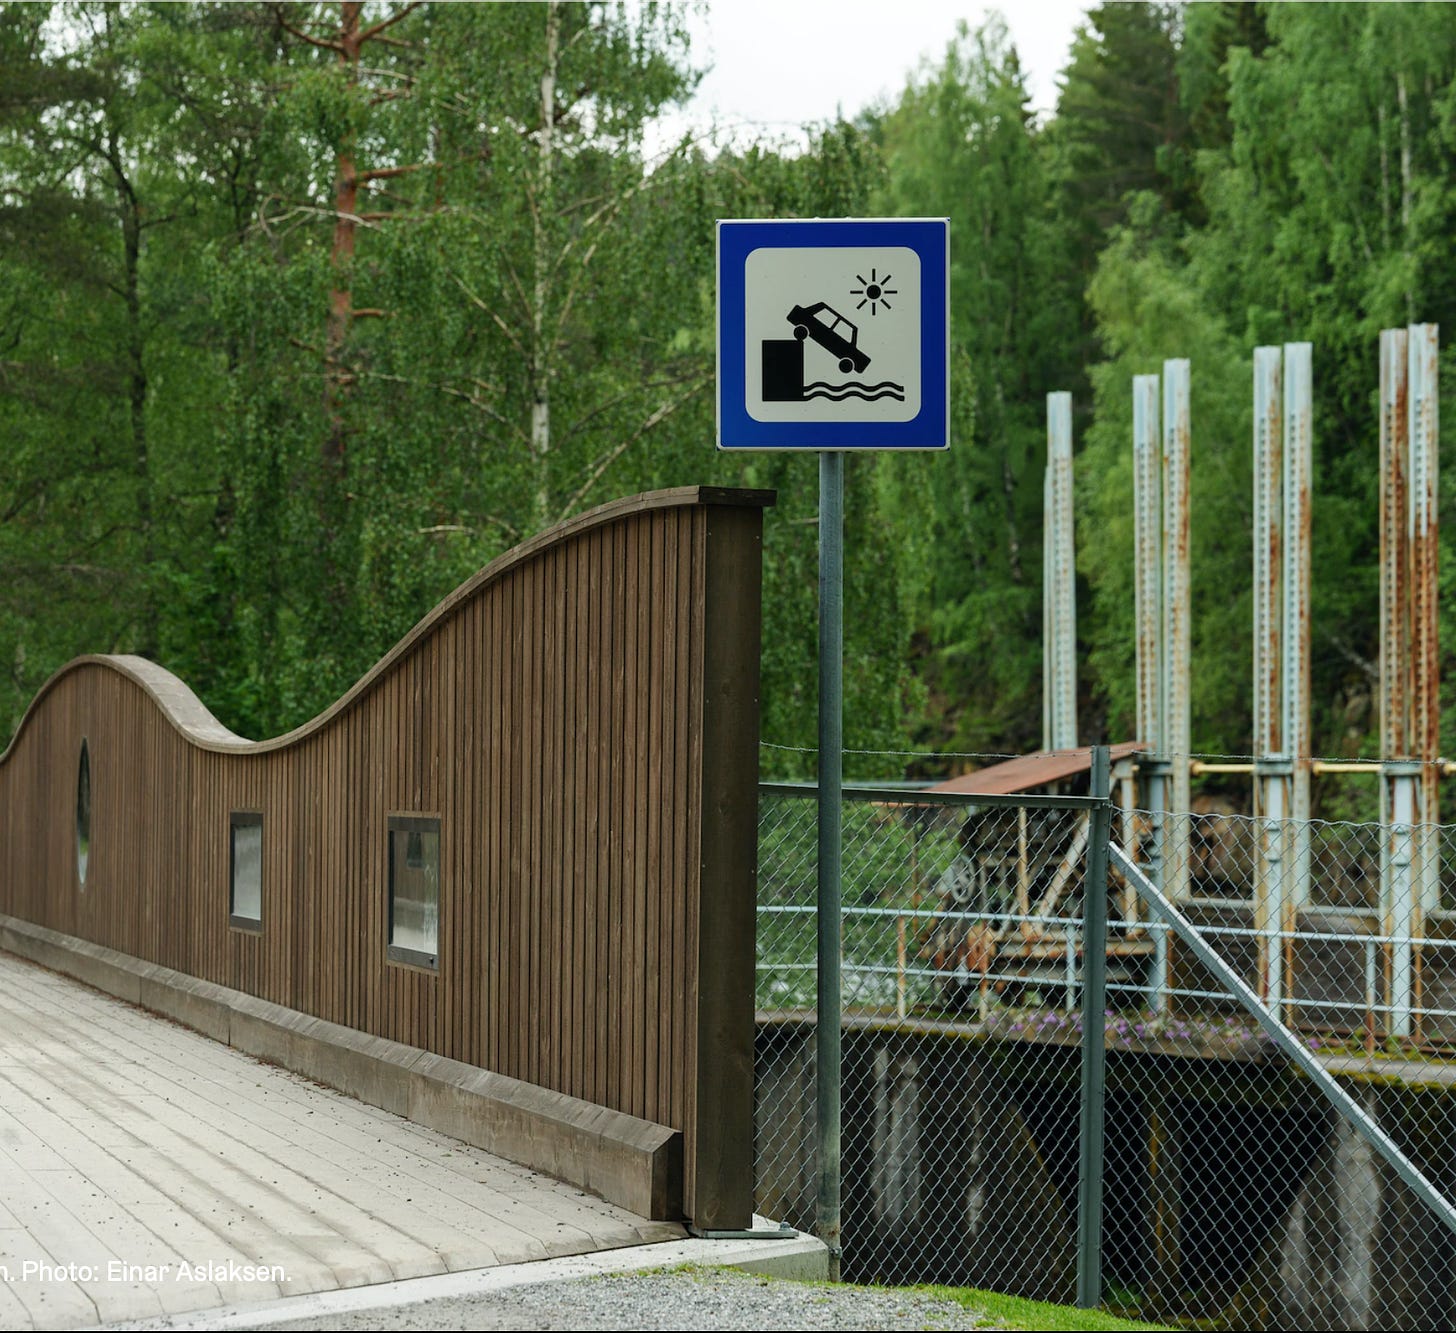 A sign on a bridge

Description automatically generated